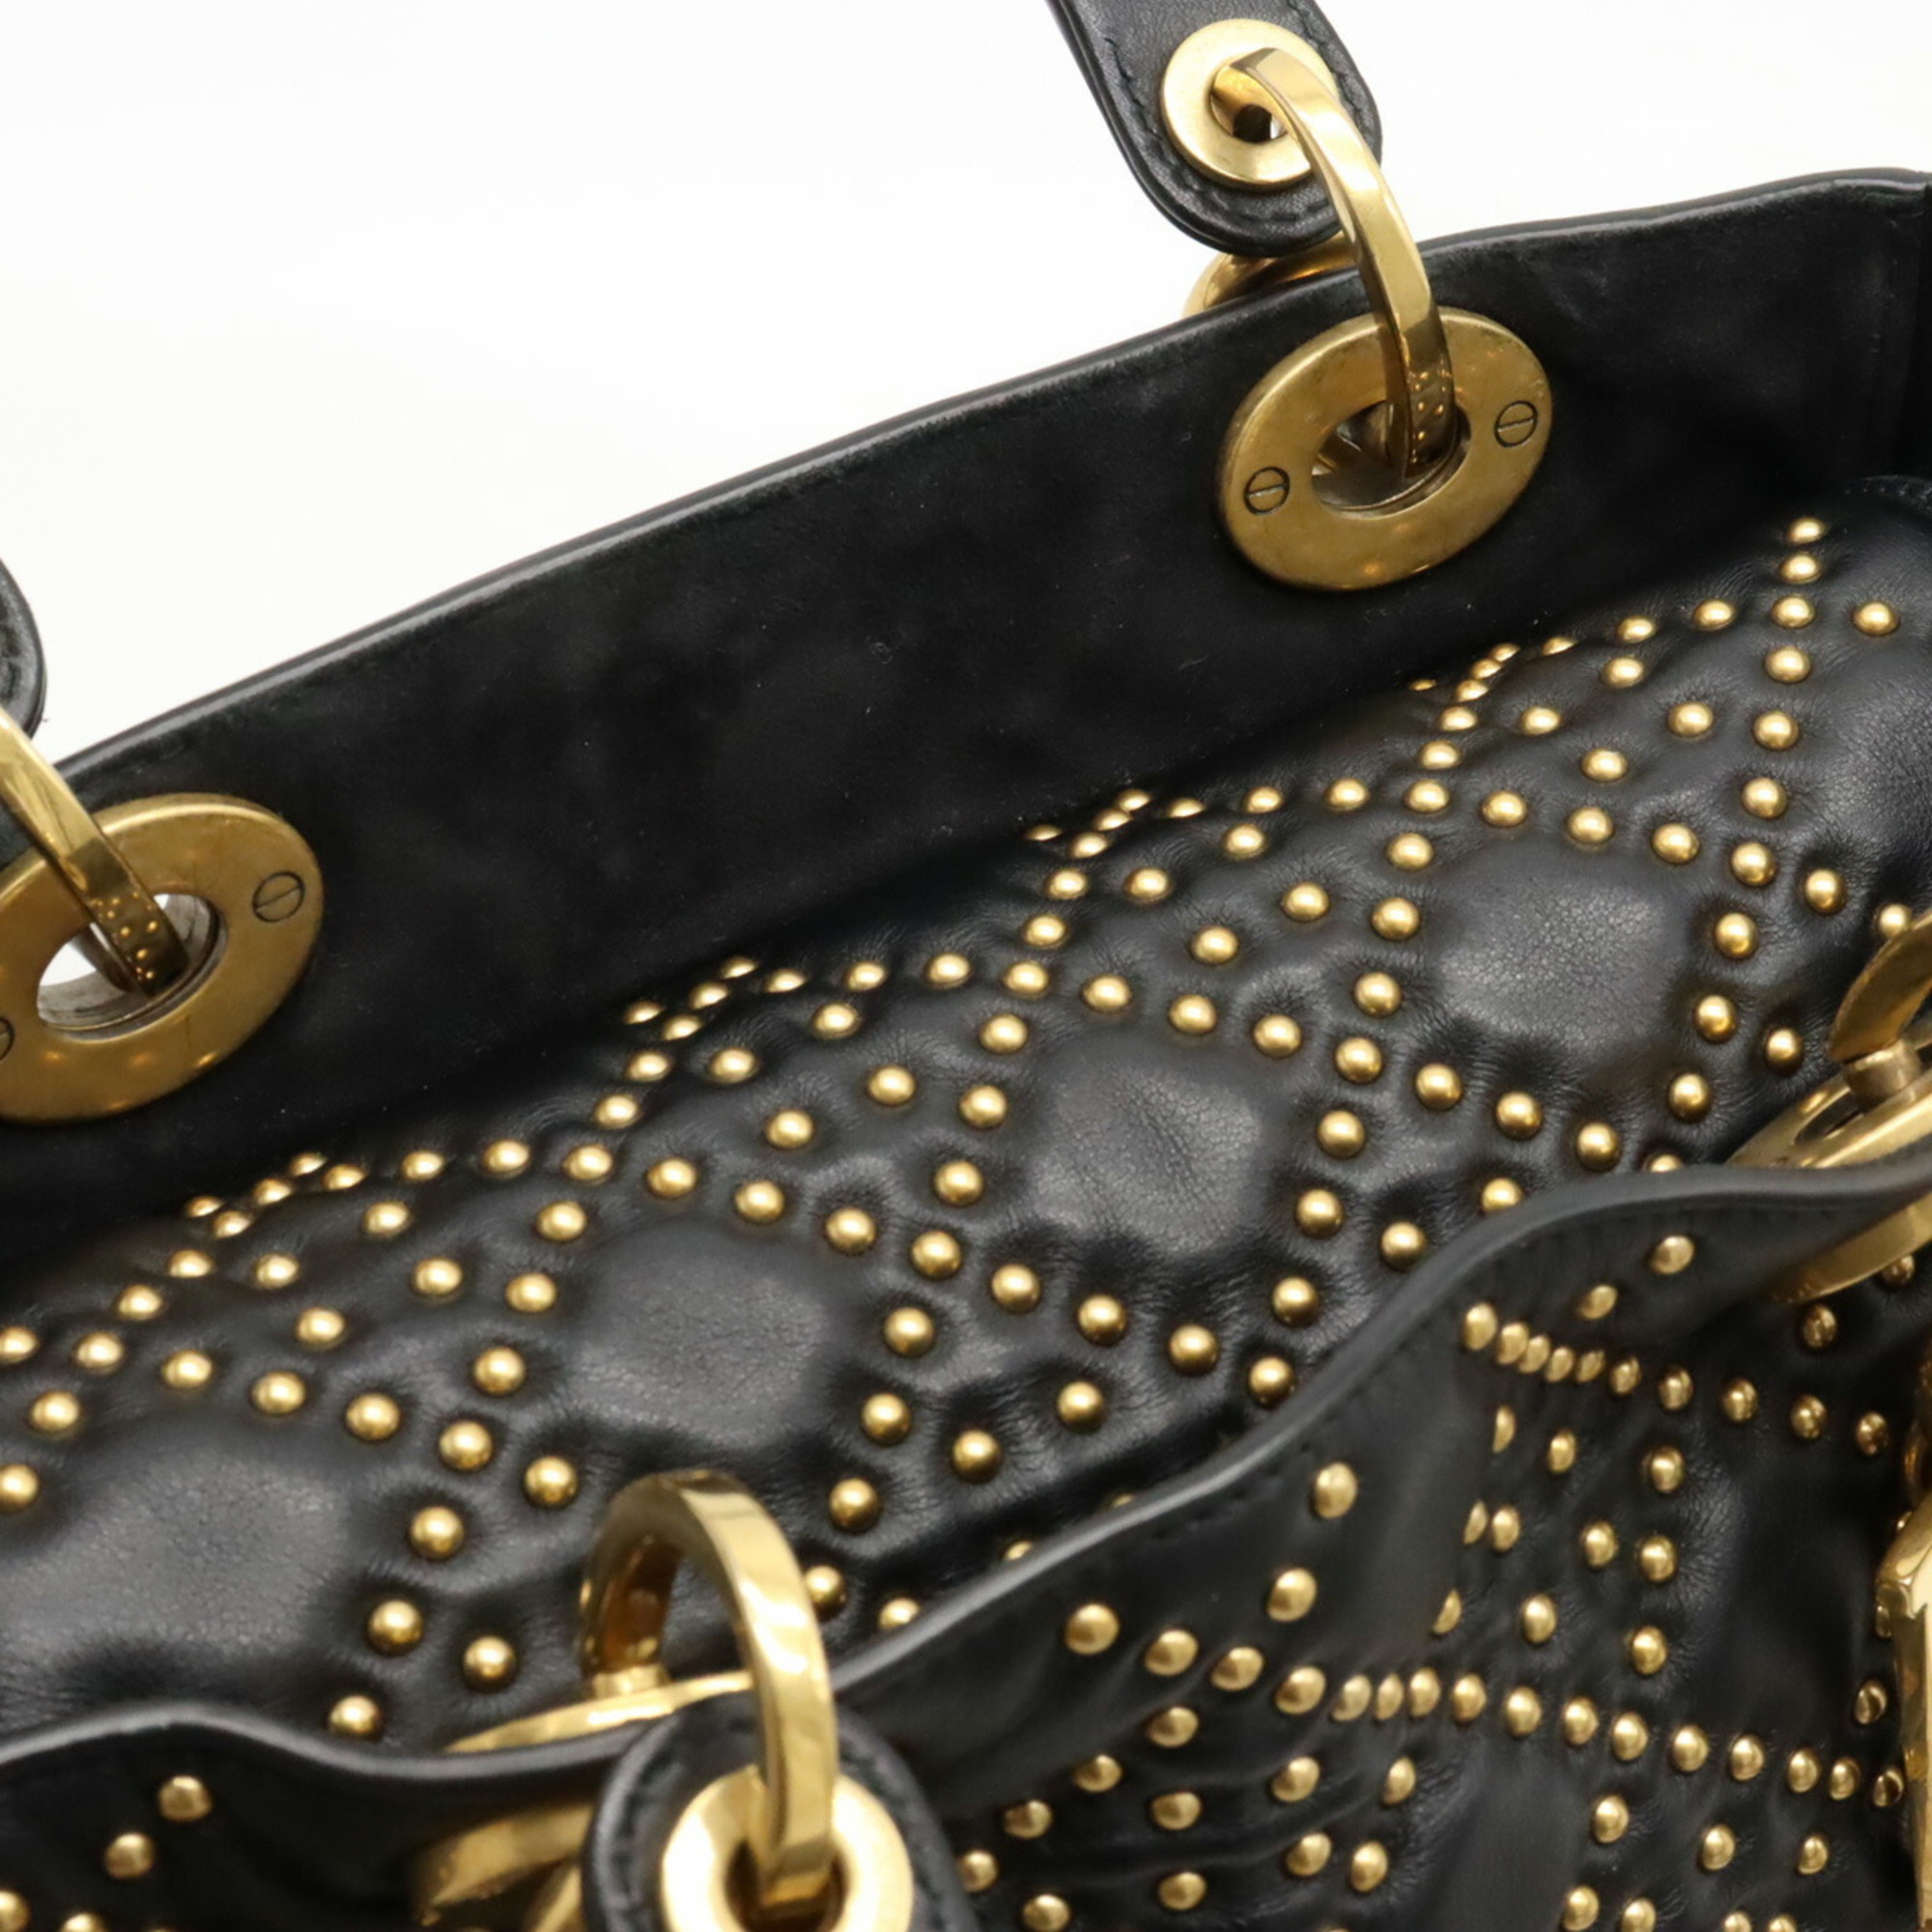 Christian Dior Lady M Medium Studs Handbag Shoulder Bag Leather Black